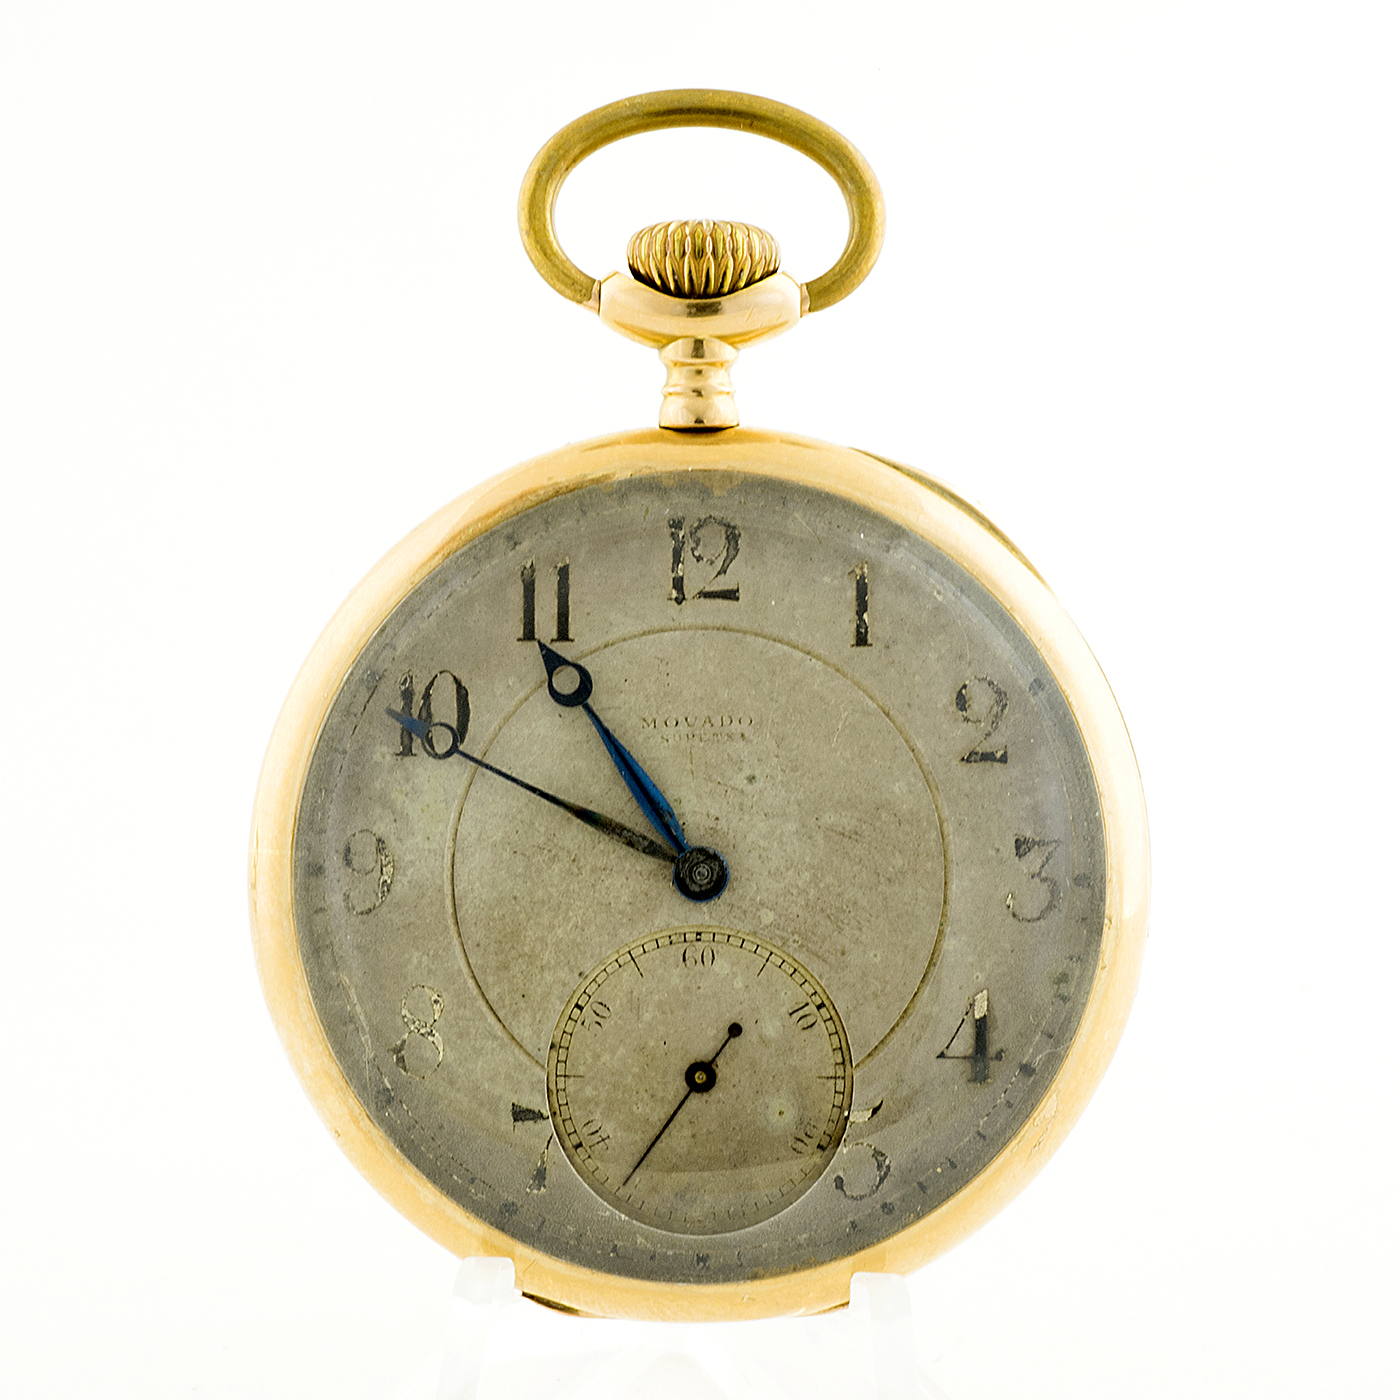 MOVED. Pocket watch for men, lepine and remontoir. Ca. 1890